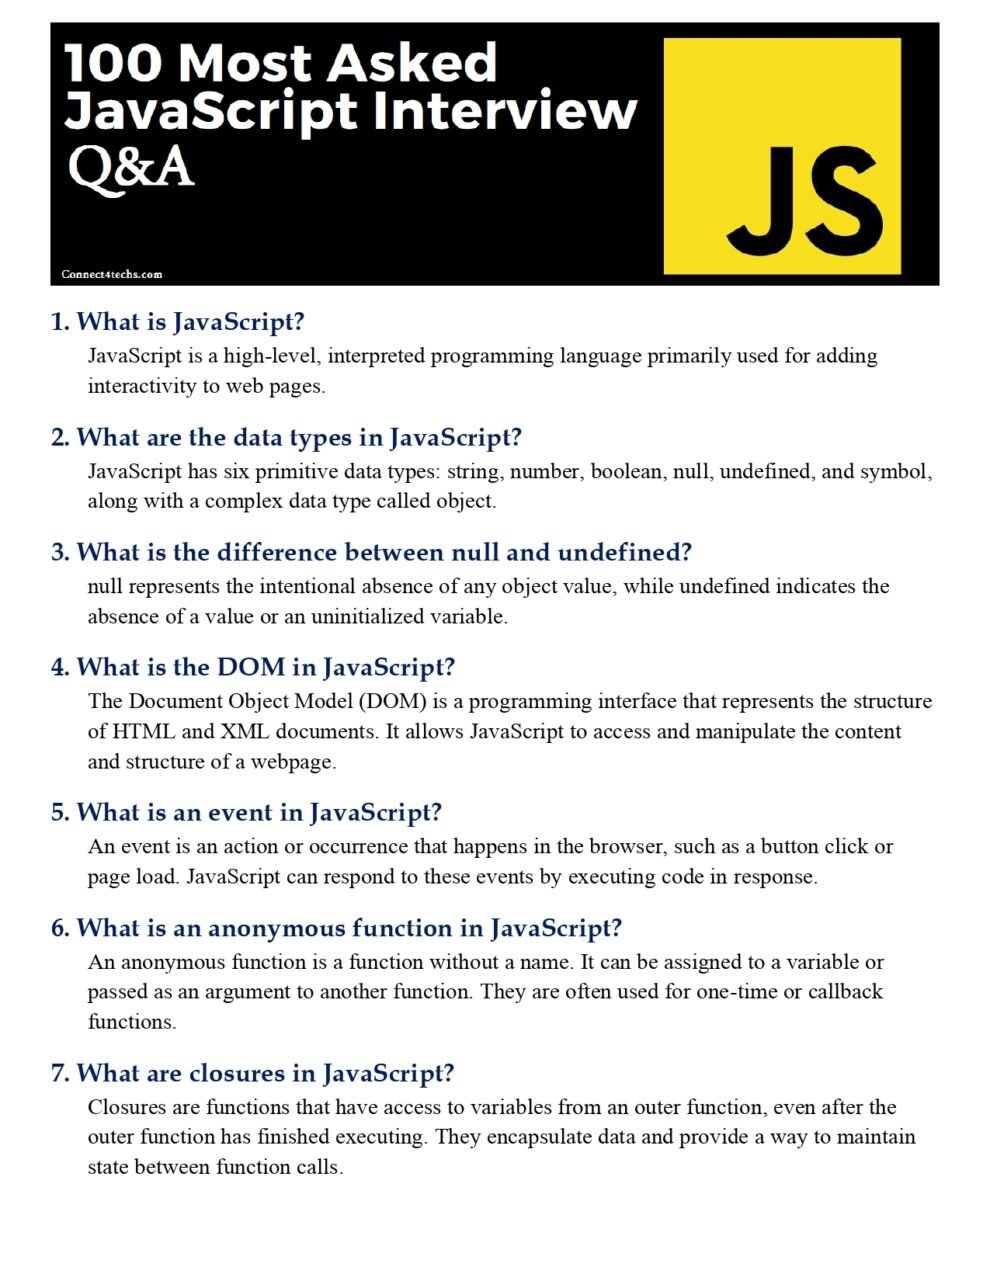 Most Asked JavaScript Interview (100 Q&A) PDF